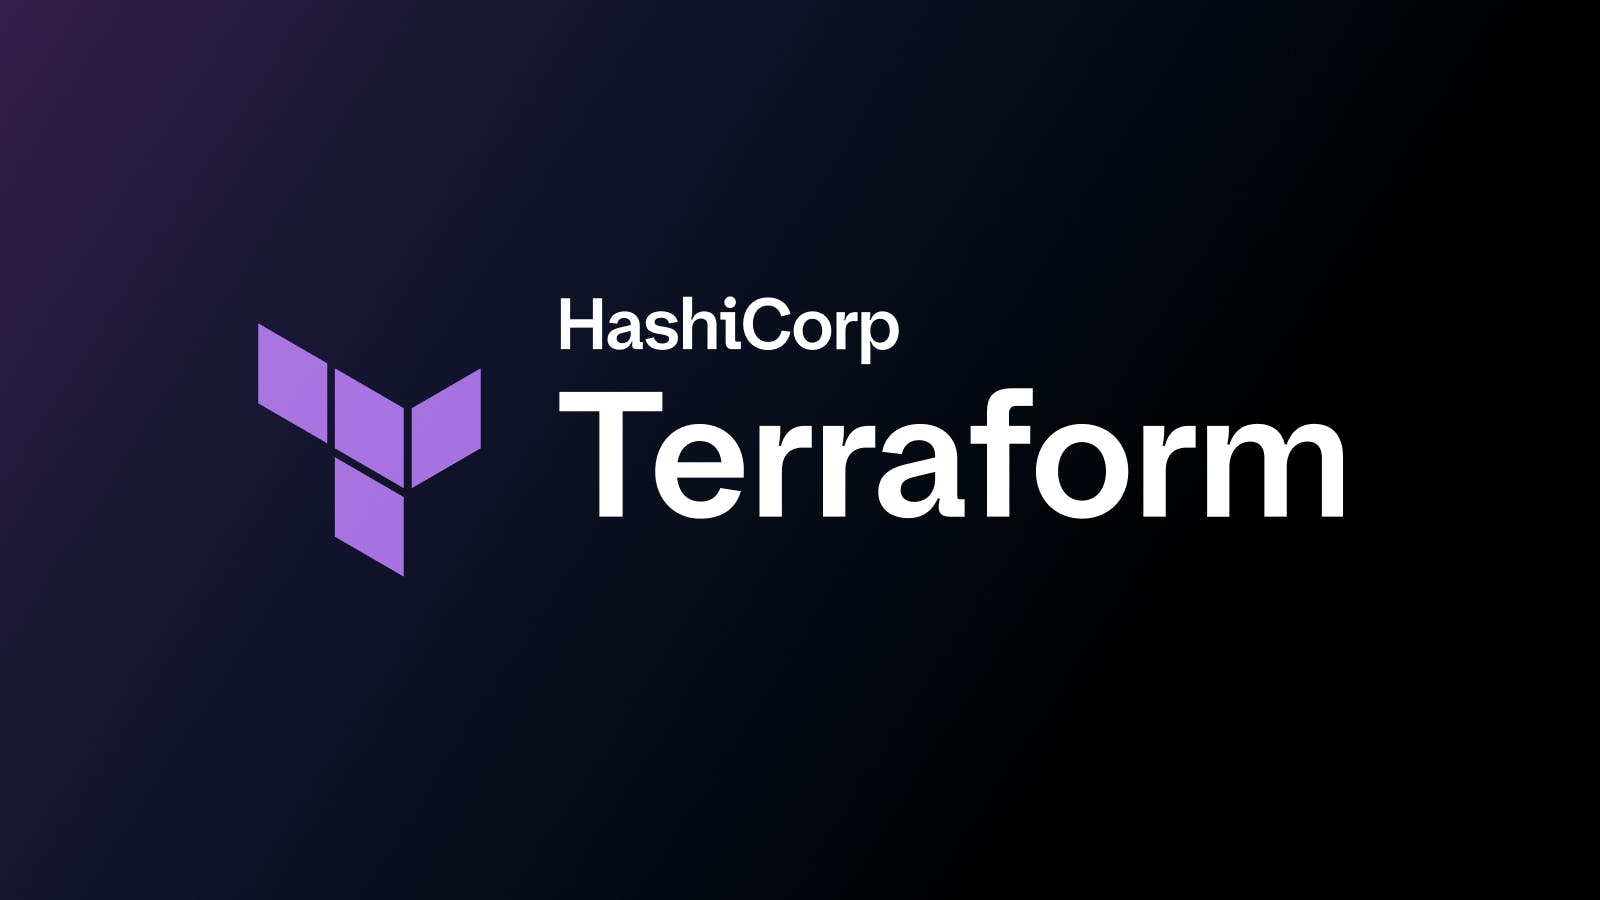 Terraform improves permissions management for teams